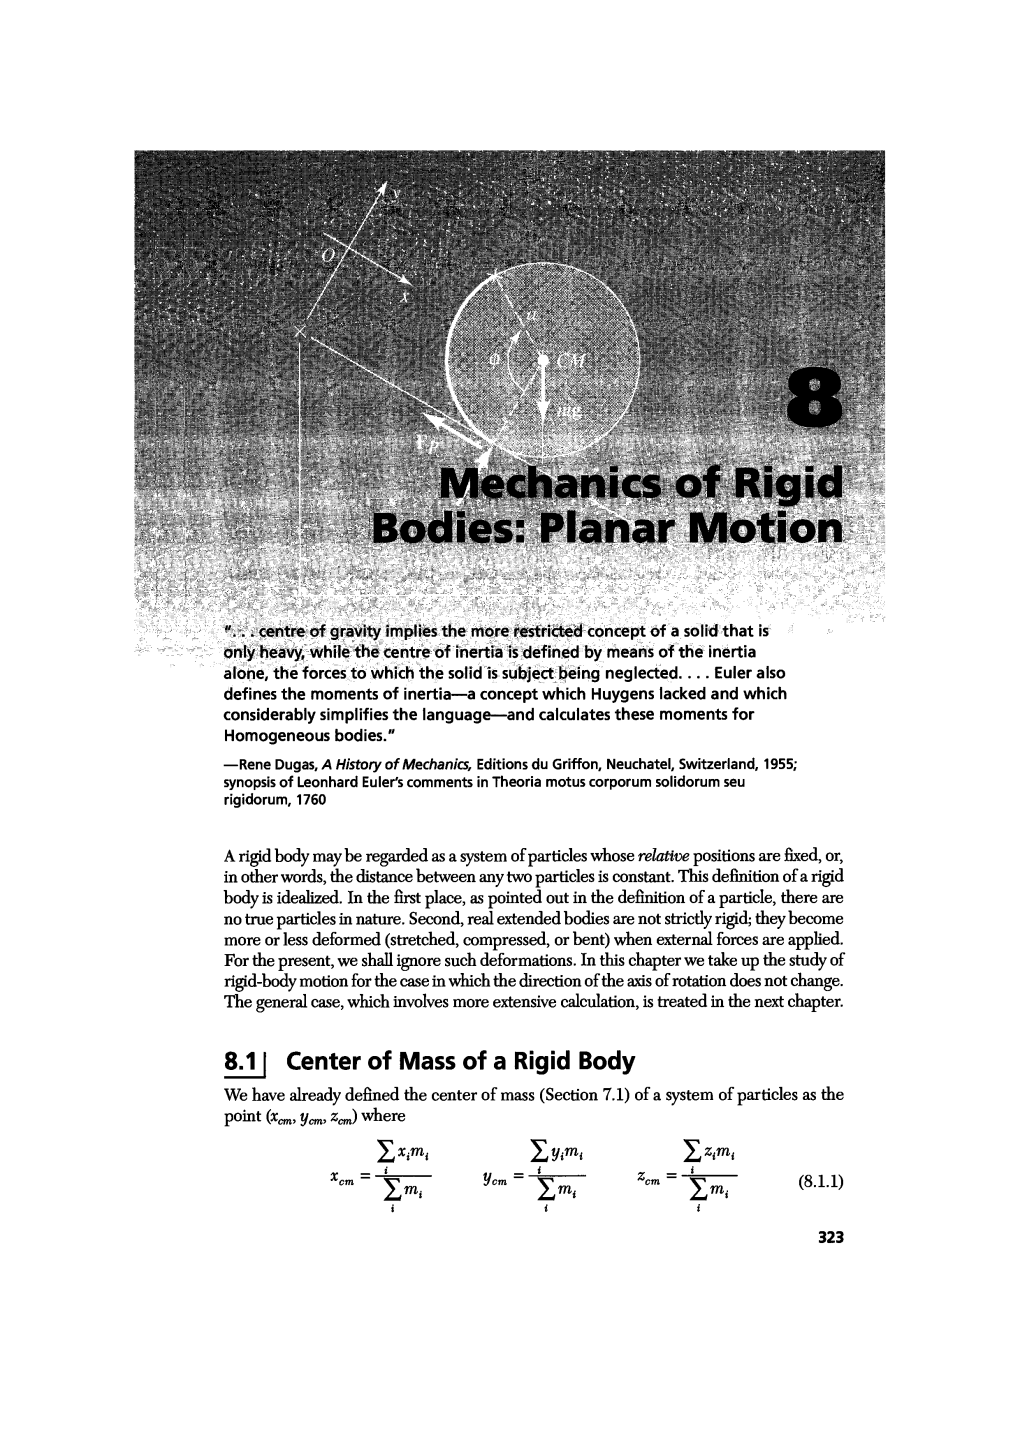 Motion of Rigid Bodies